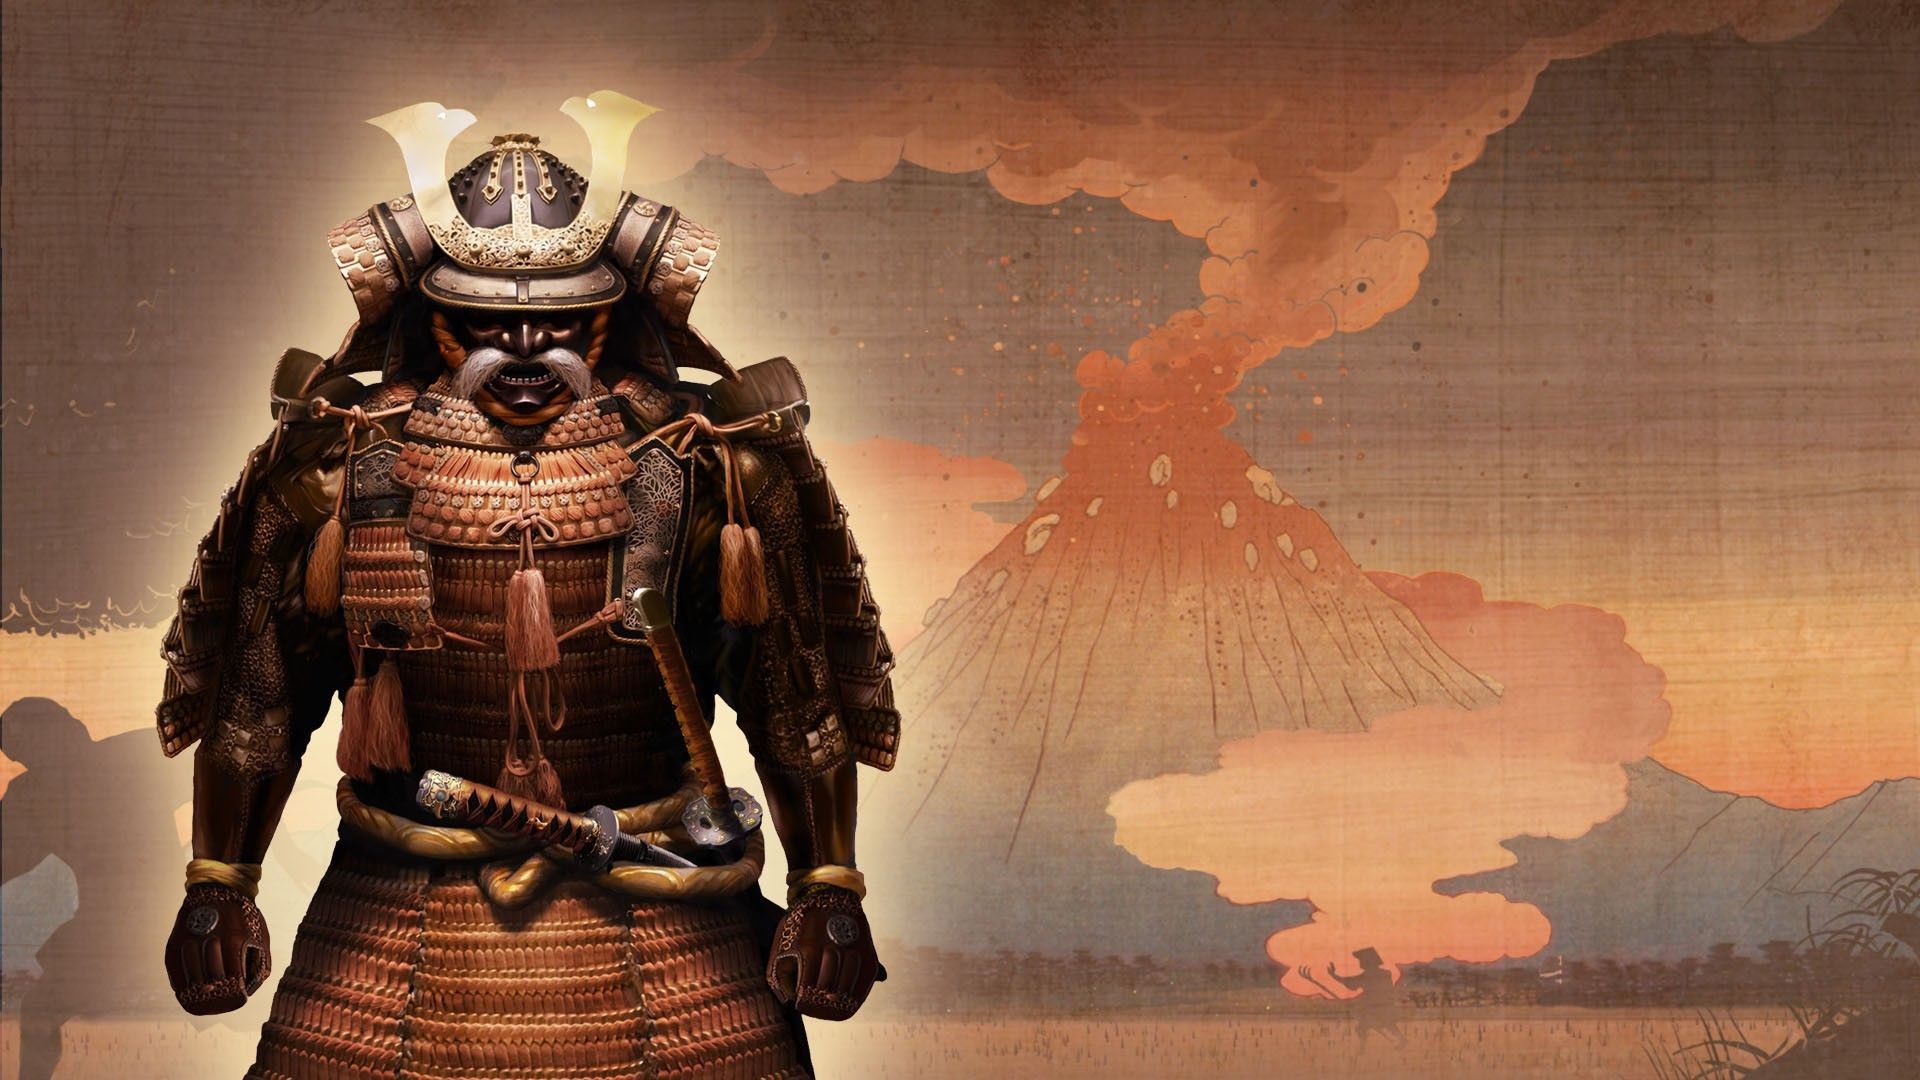 Samurai Warrior Wallpaper (best Samurai Warrior Wallpaper and image) on WallpaperChat